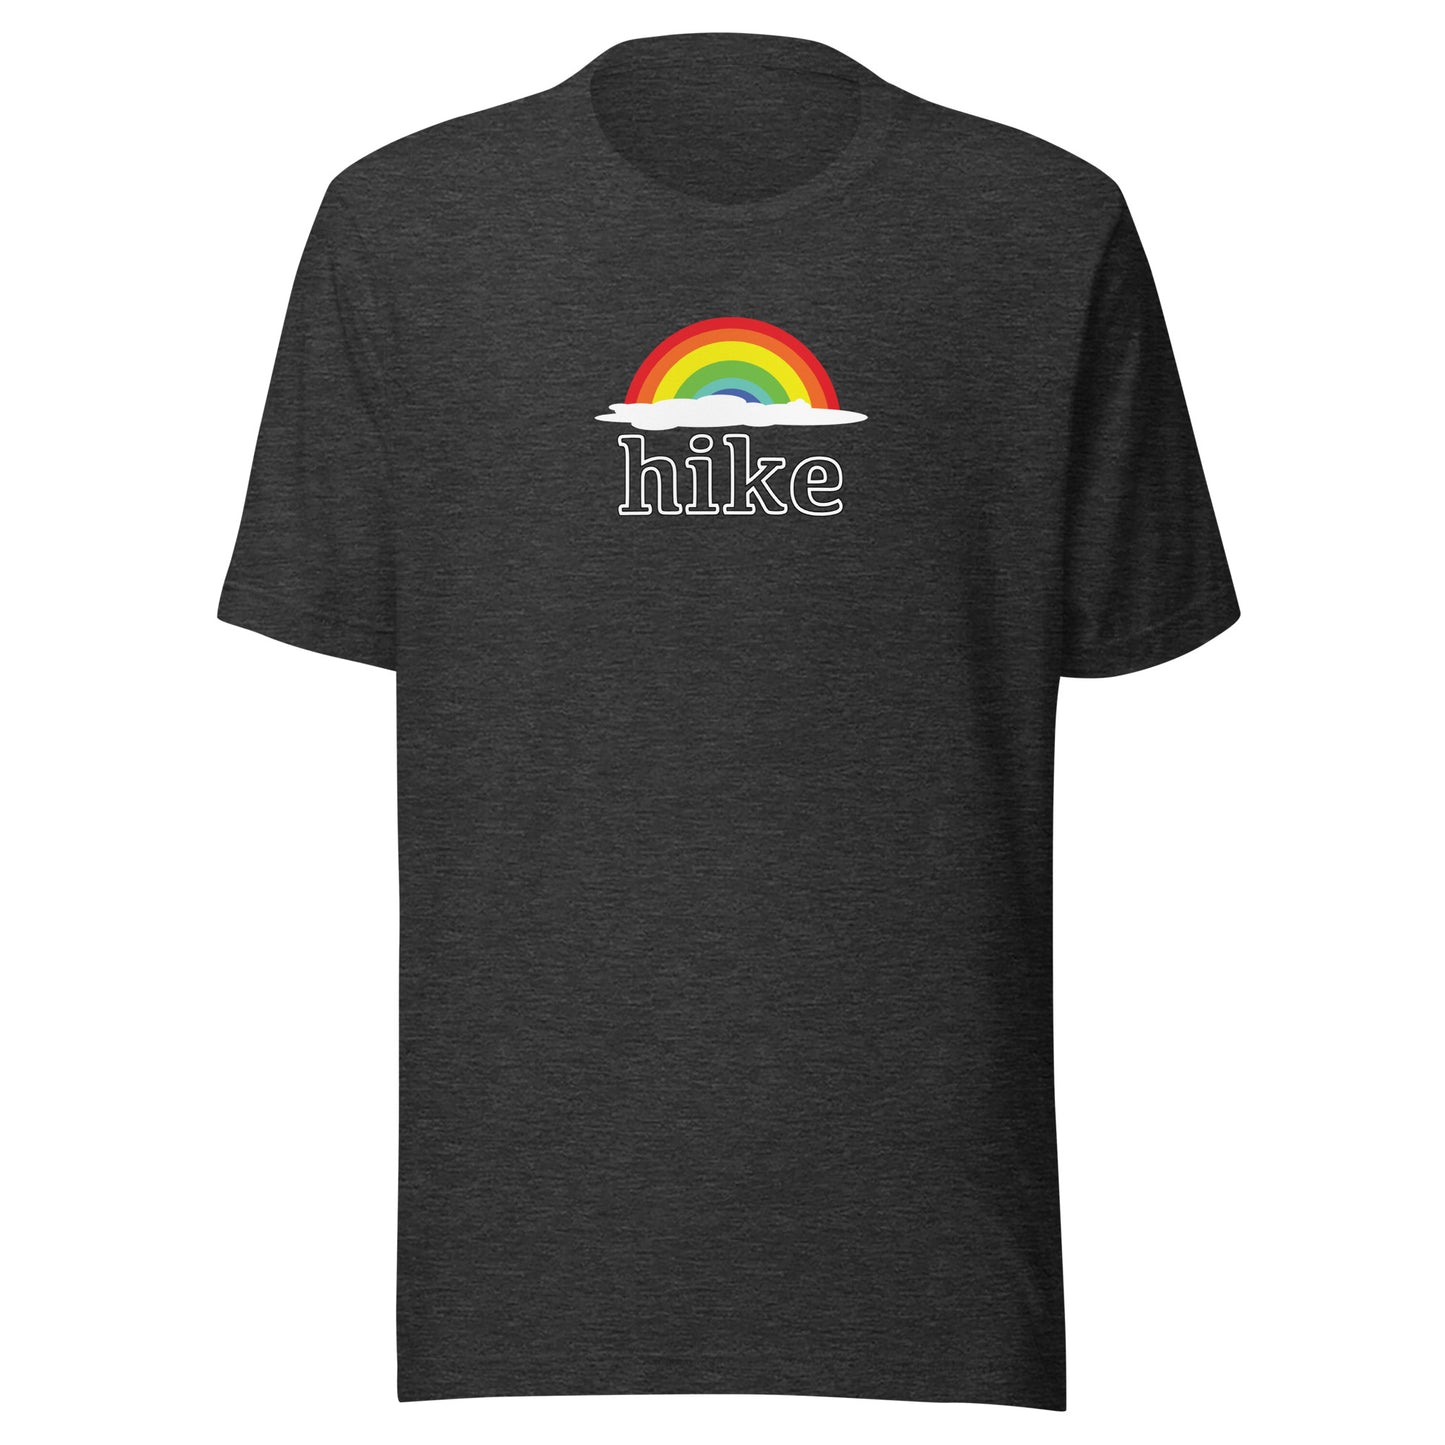 Rainbow Hike - Unisex t-shirt